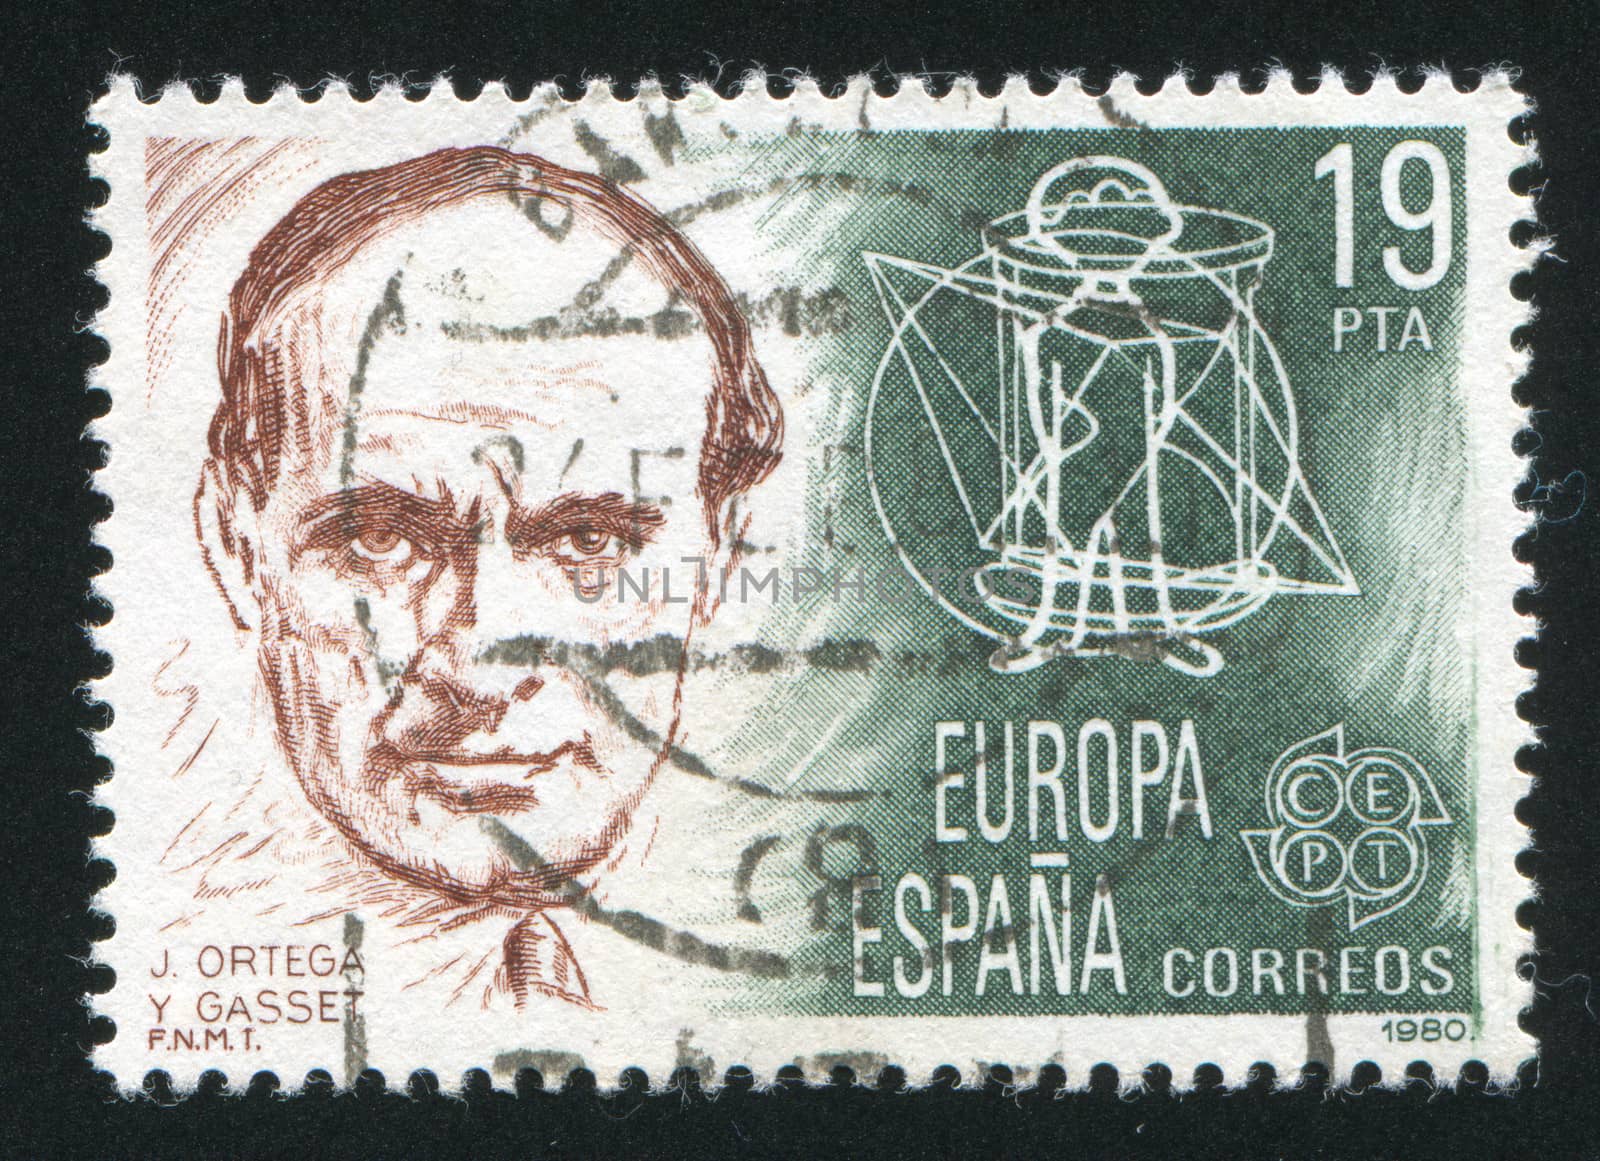 SPAIN - CIRCA 1980: stamp printed by Spain, shows Portrait of J.Ortega Y.Gasset, circa 1980